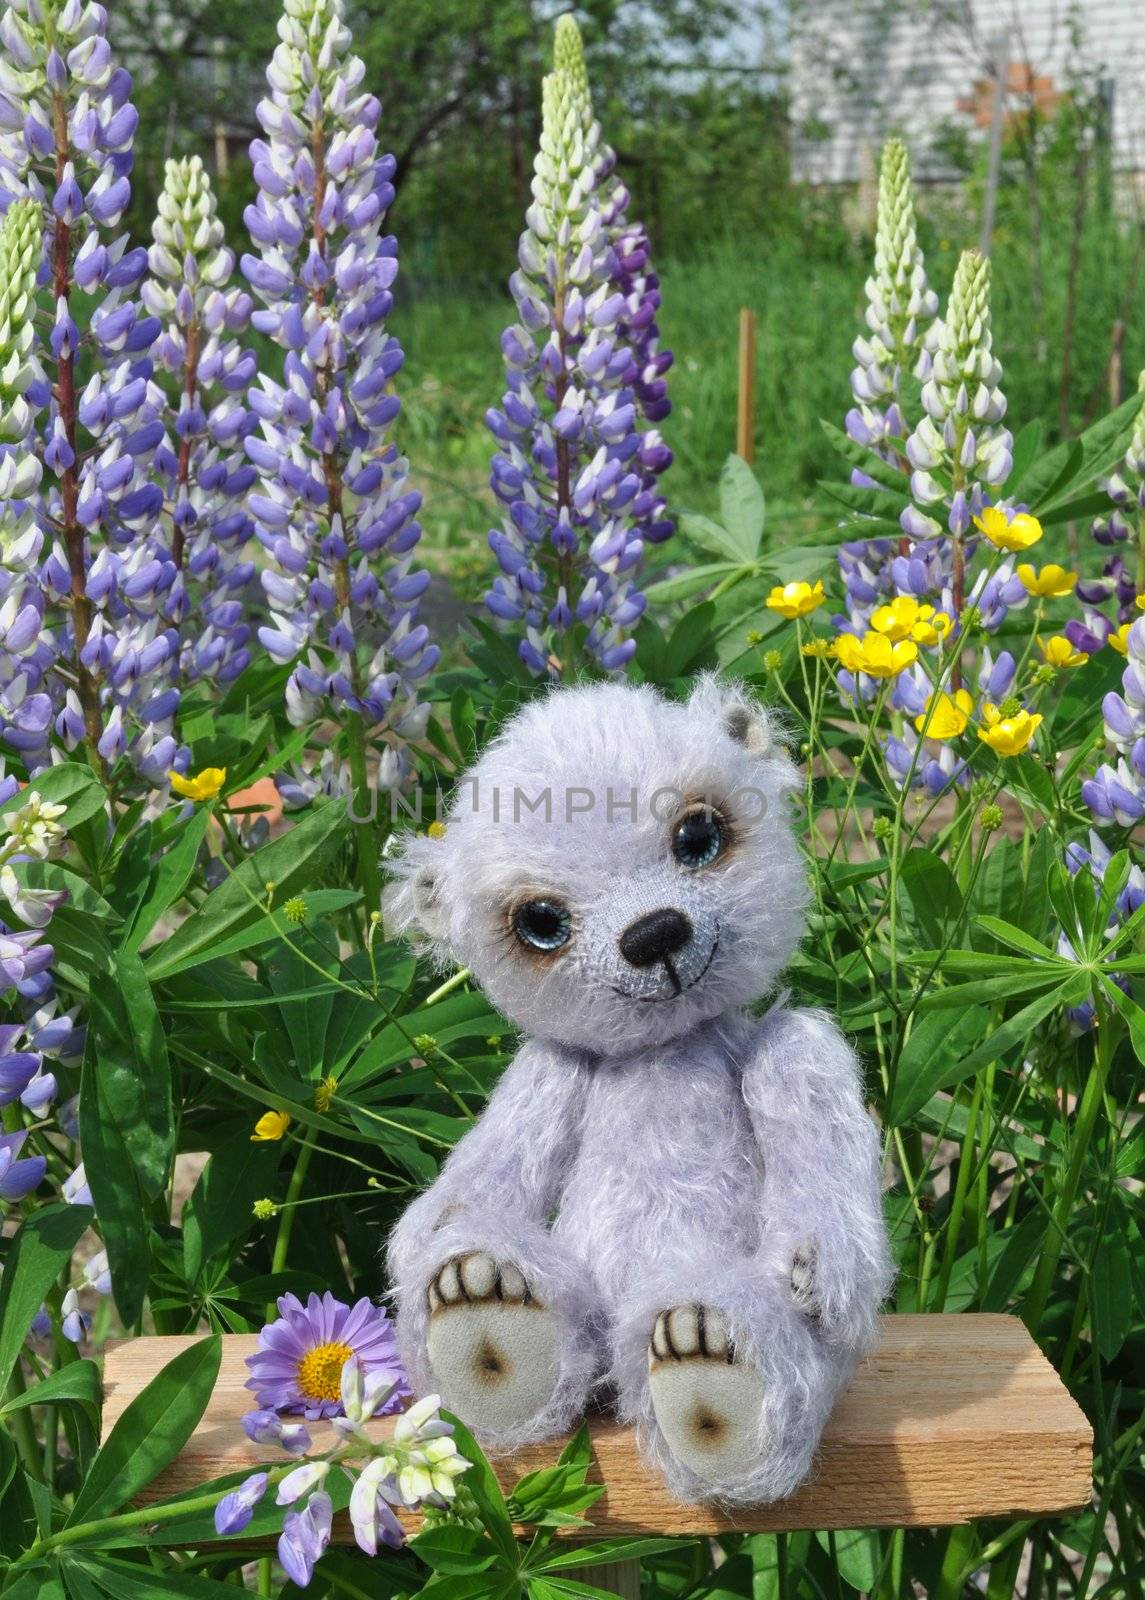 Teddy bear Chupa among flowers by alexcoolok